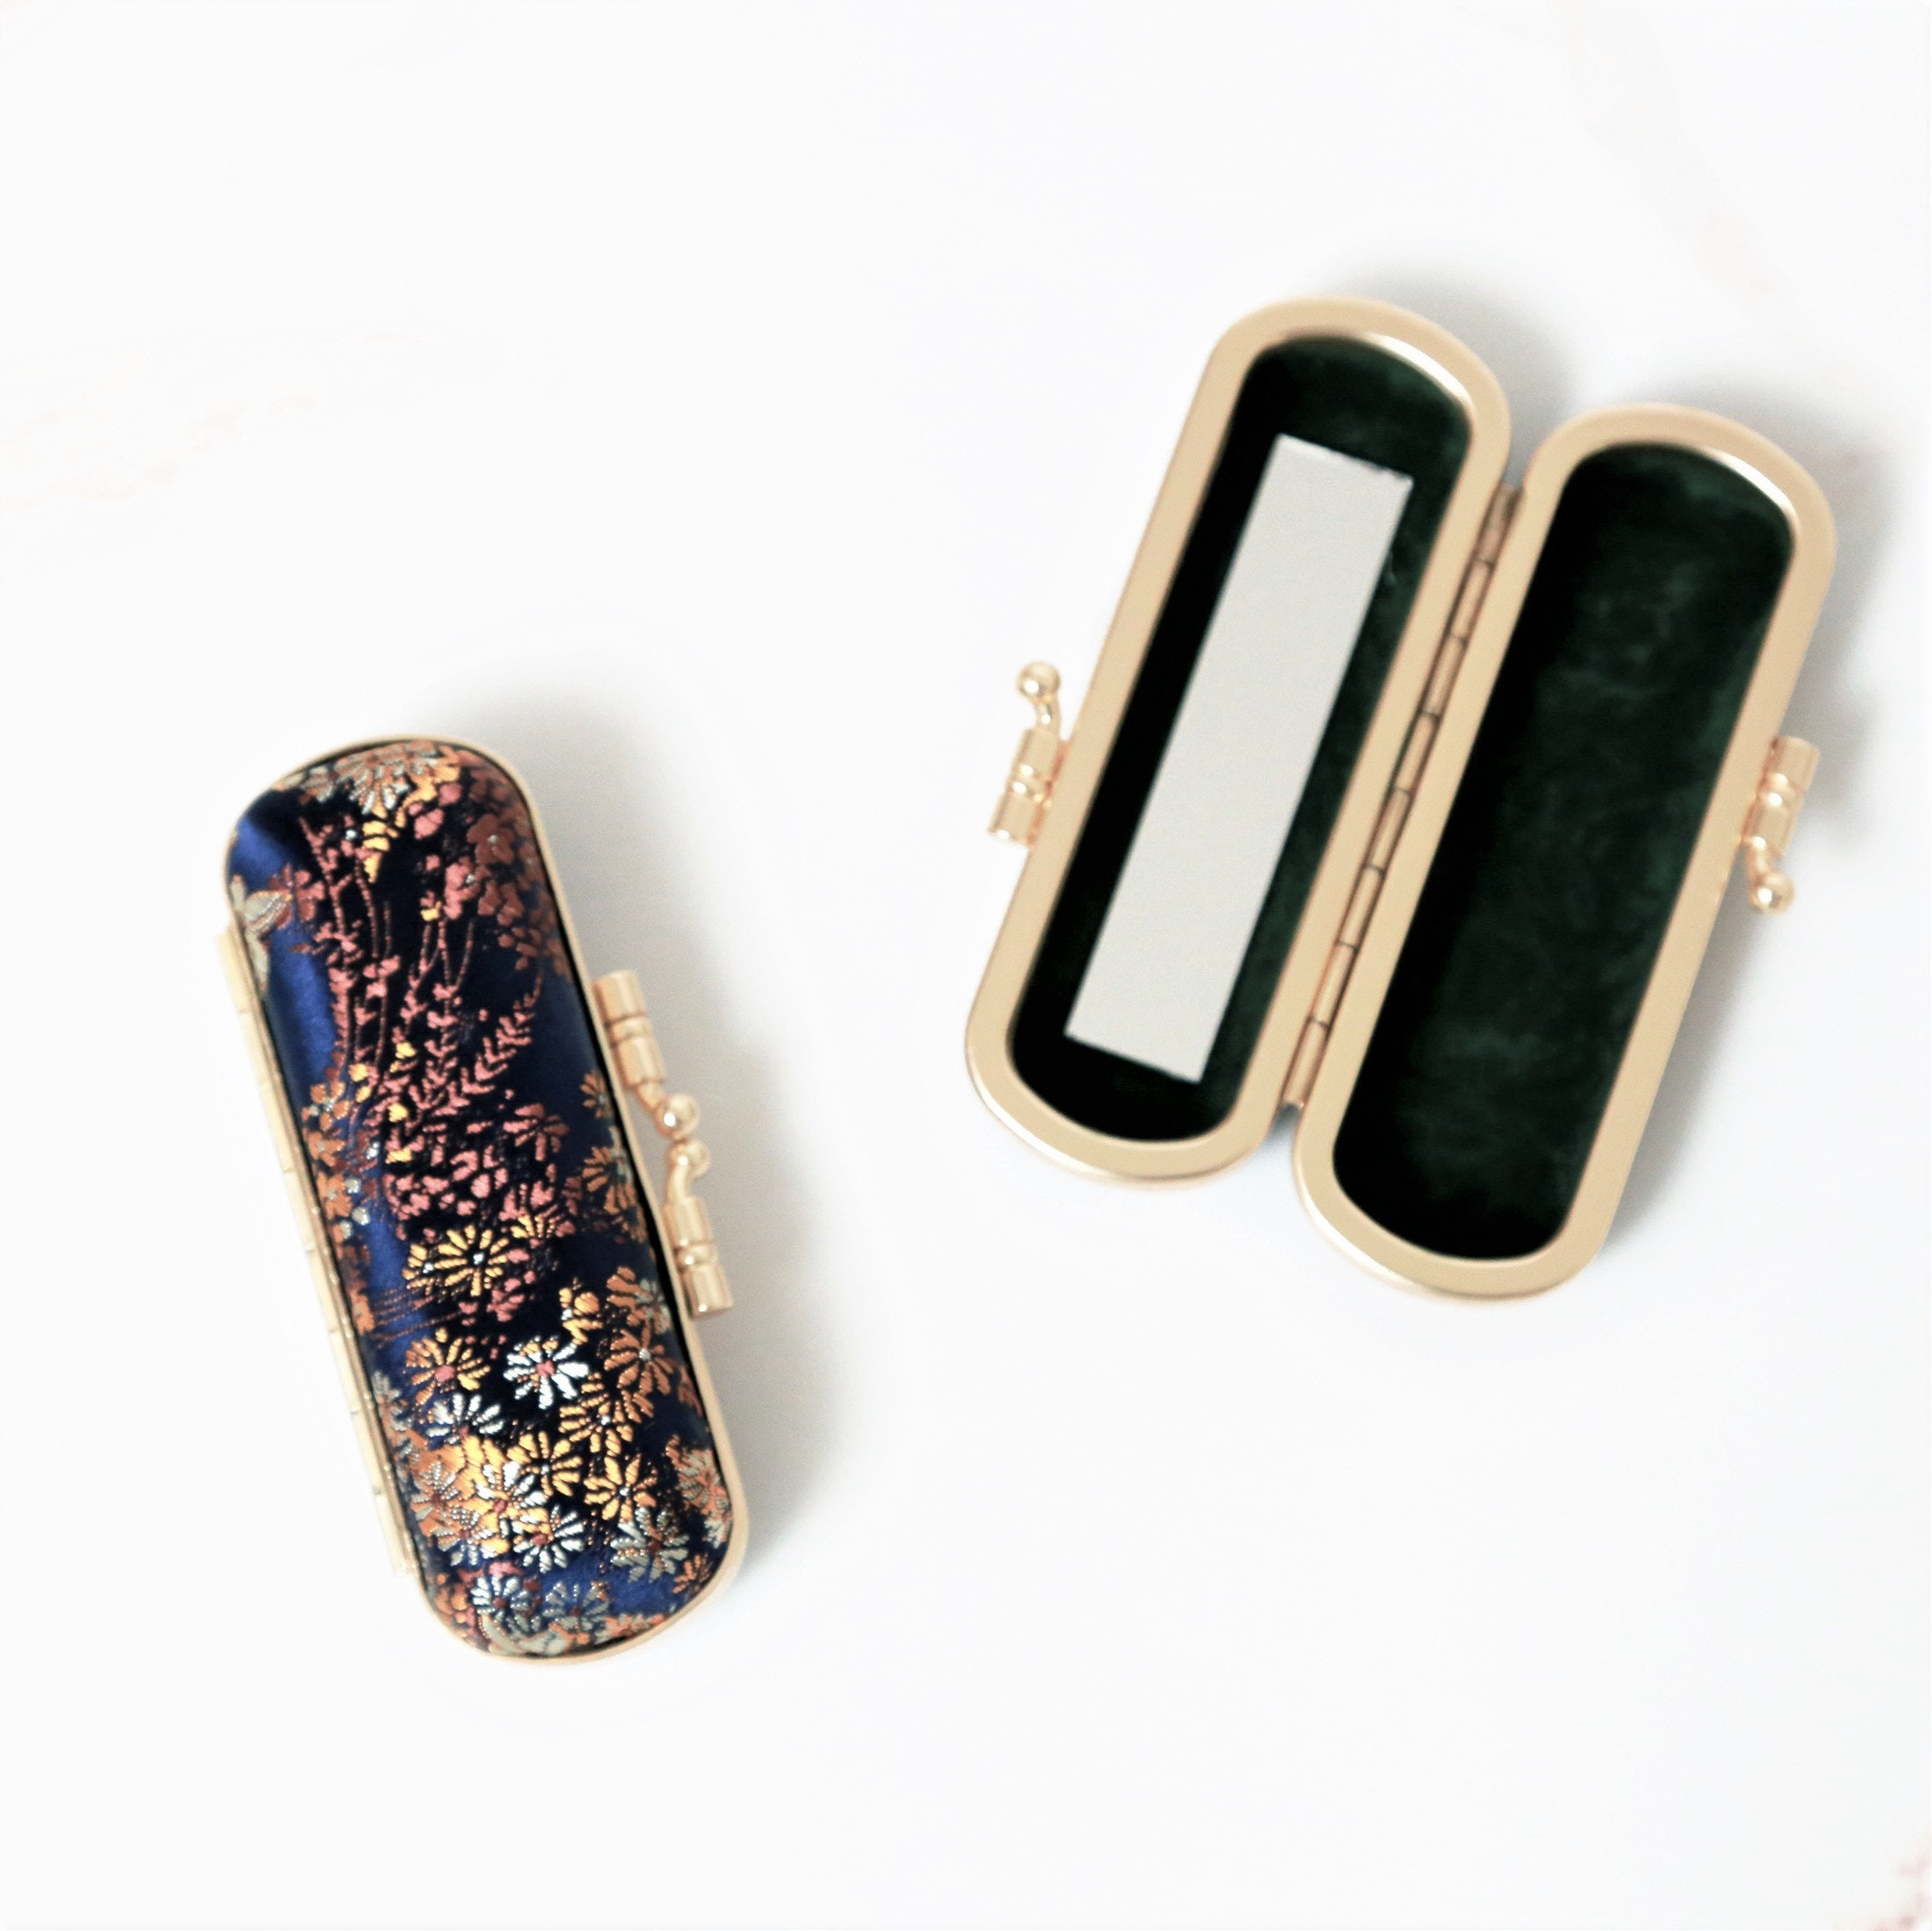 Lipstick Case Holder with Mirror, Hanyi 3 Pcs Vintage Floral Print Lipstick  Holder Box for Purse